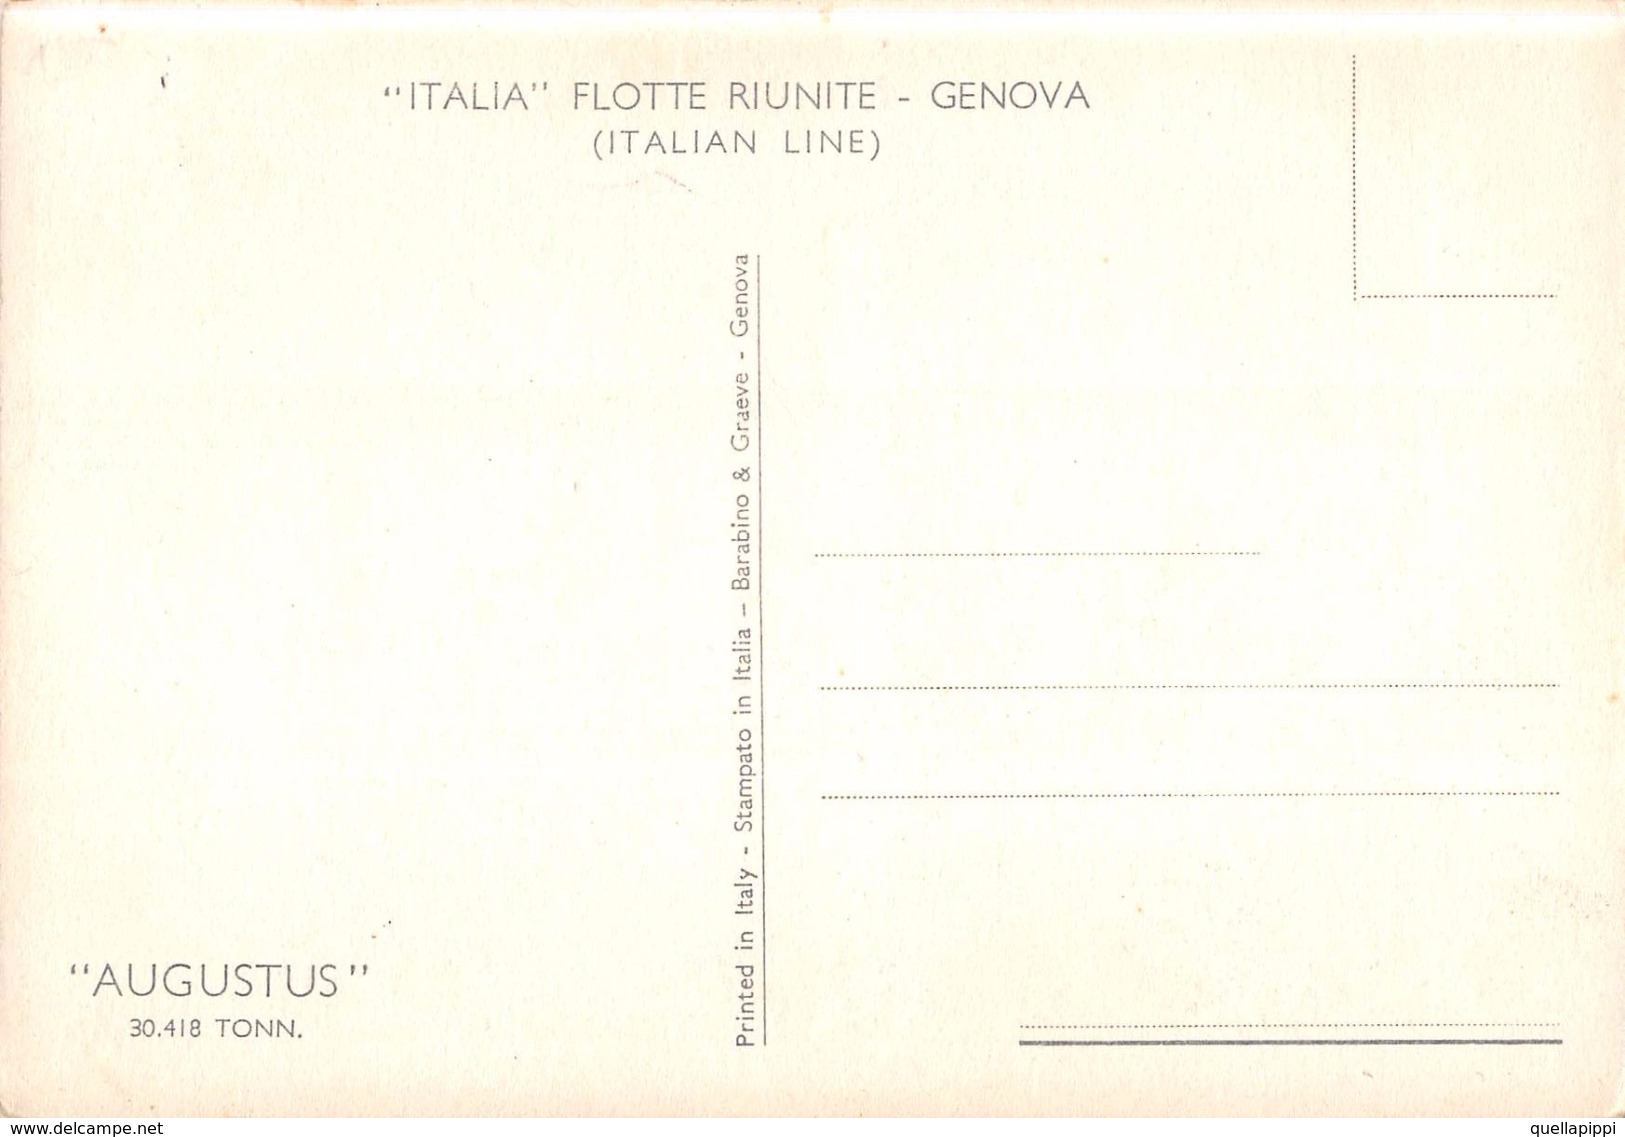 05422 "MOTONAVE AUGUSTUS 30418 TONN - ITALIA FLOTTE RIUNITE - GENOVA"  CART NON SPED - Banche